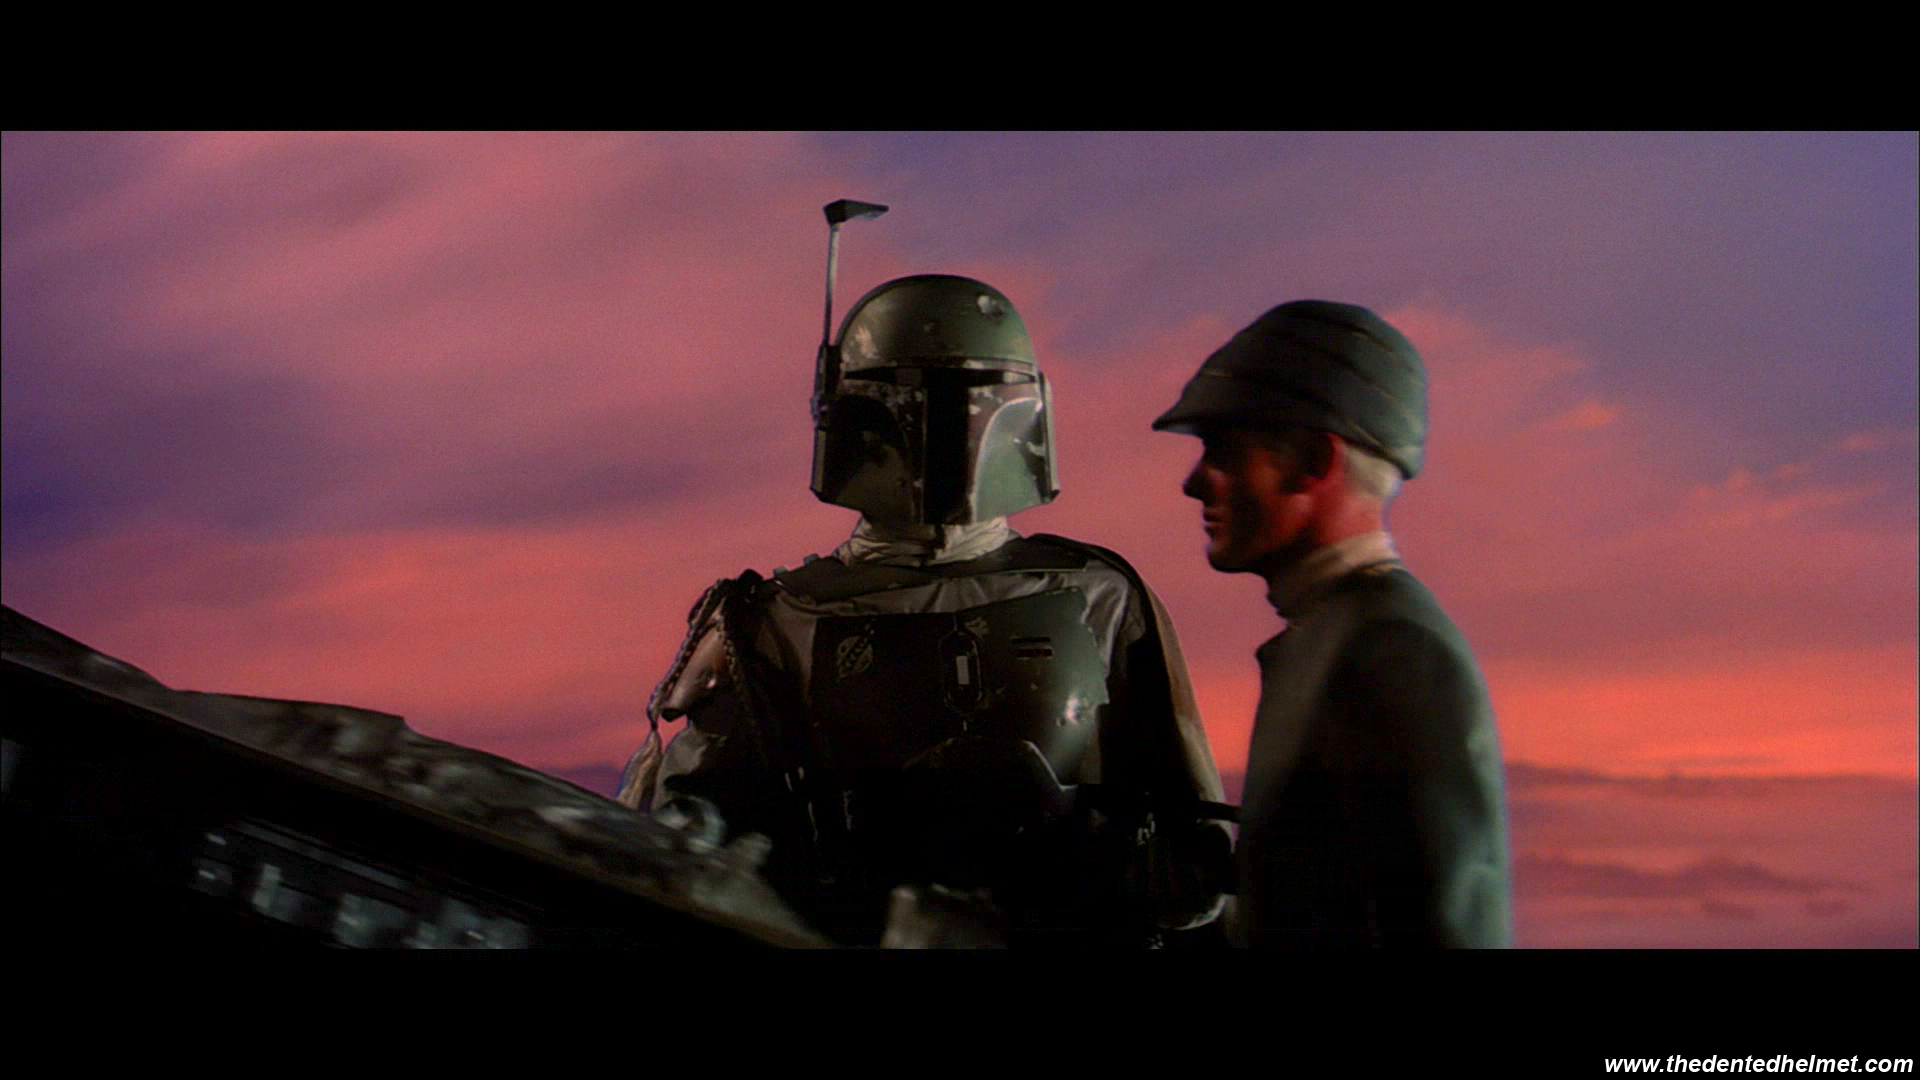 Boba Fett Empire Strikes Back Costume - HD Screen Captures